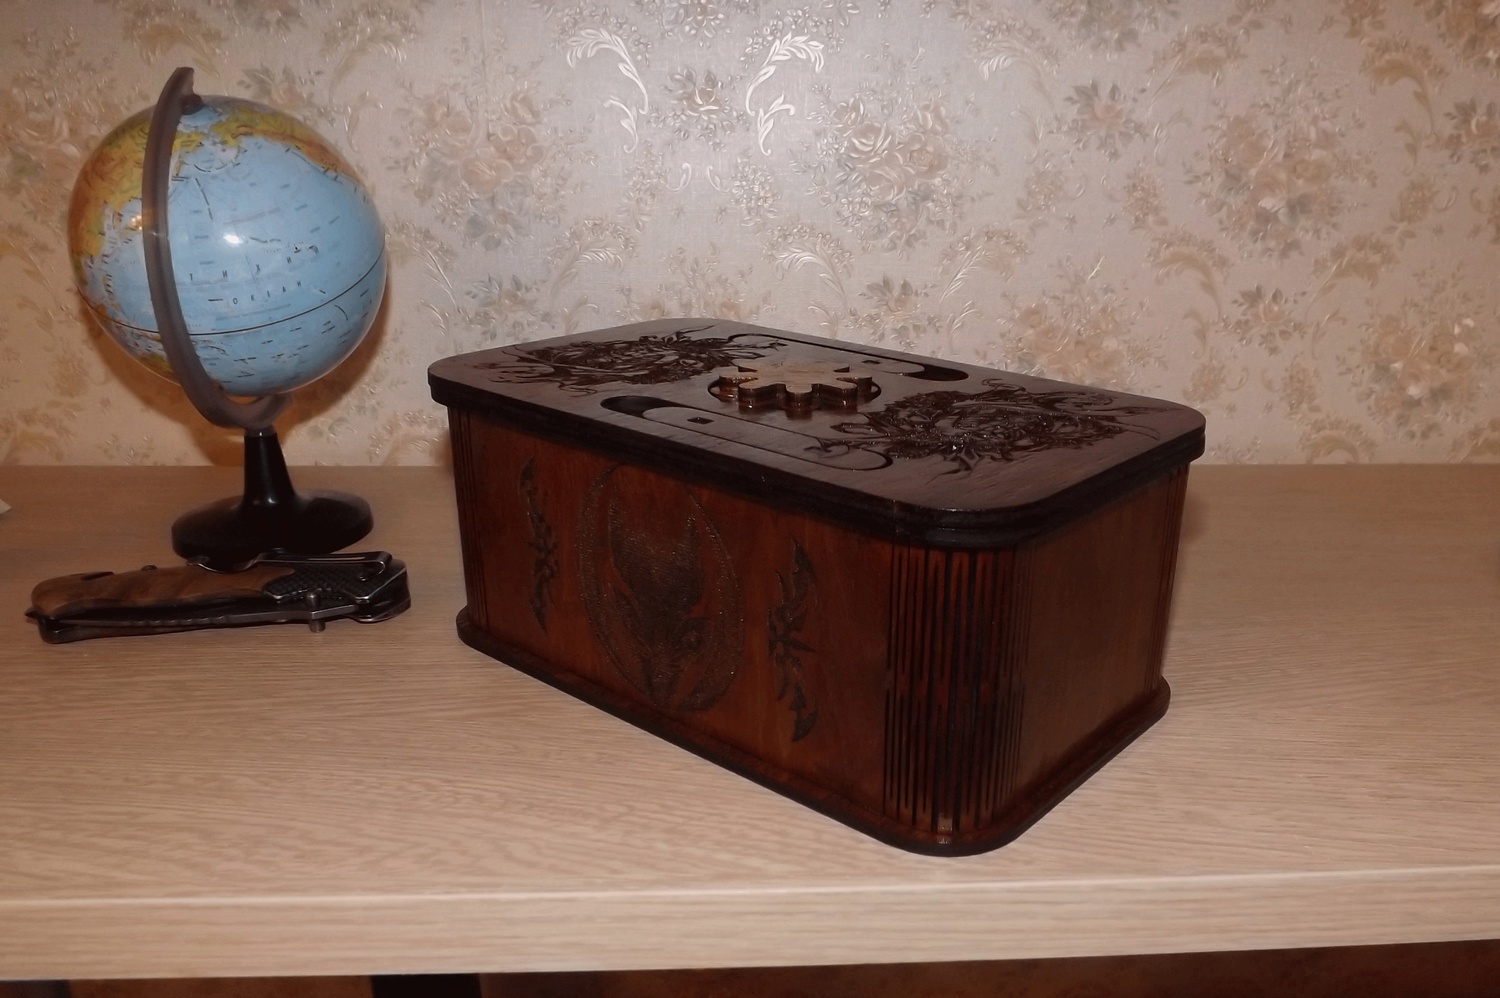 صندوق خشبي مقطوع بالليزر مع قفل